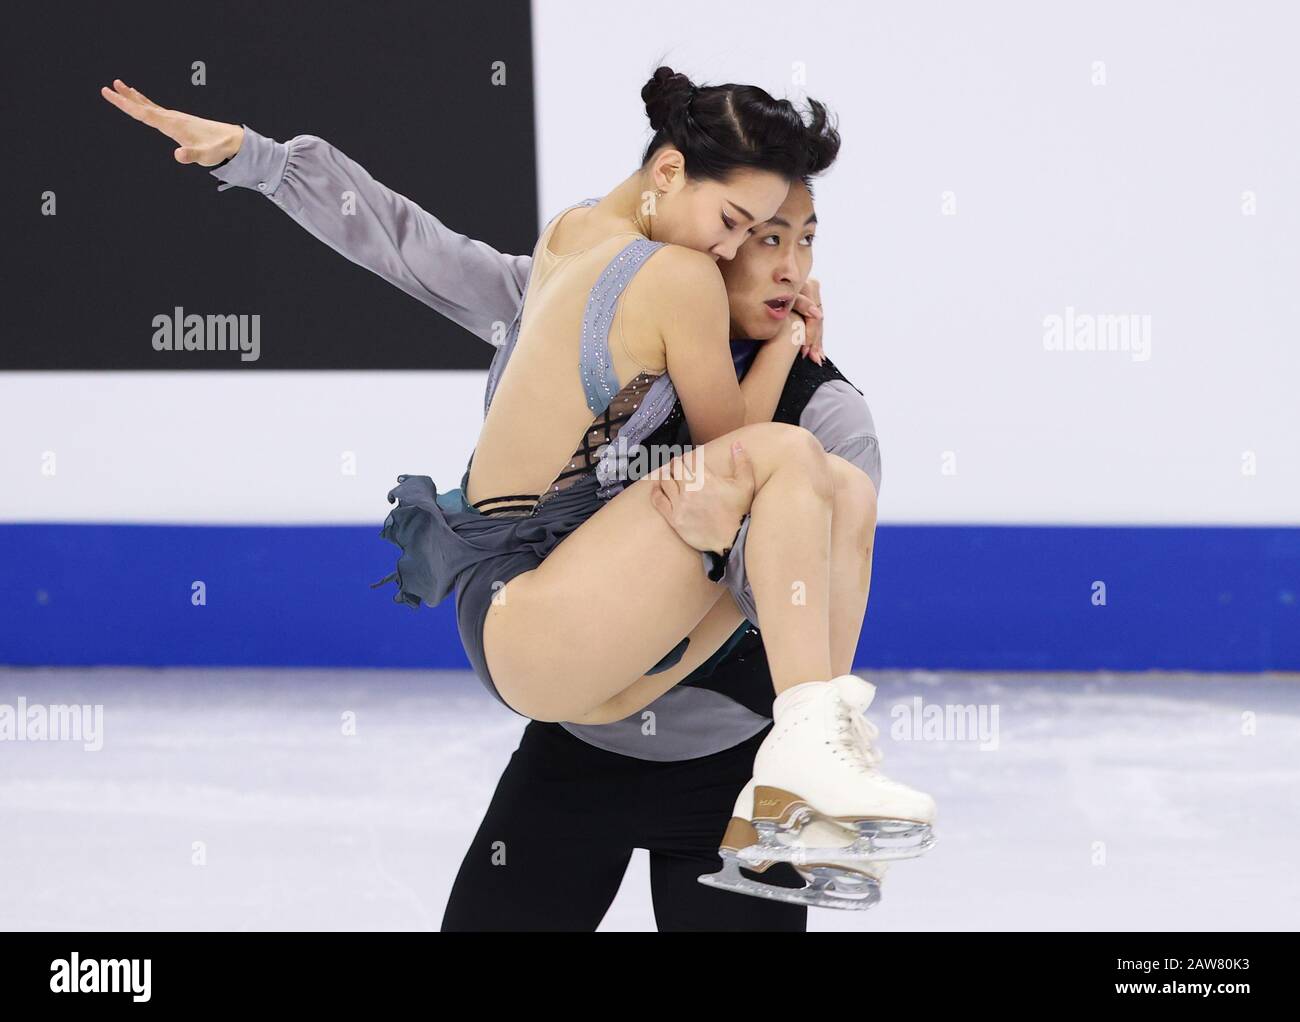 (200207) -- SEOUL, Feb. 7, 2020 (Xinhua) -- Ning Wanqi and Wang Chao (Rear) of China perform in the Ice Dance Free Dance during the ISU Four Continents Figure Skating Championship in Seoul, South Korea, Feb. 7, 2020. (Xinhua/Wang Jingqiang) Stock Photo